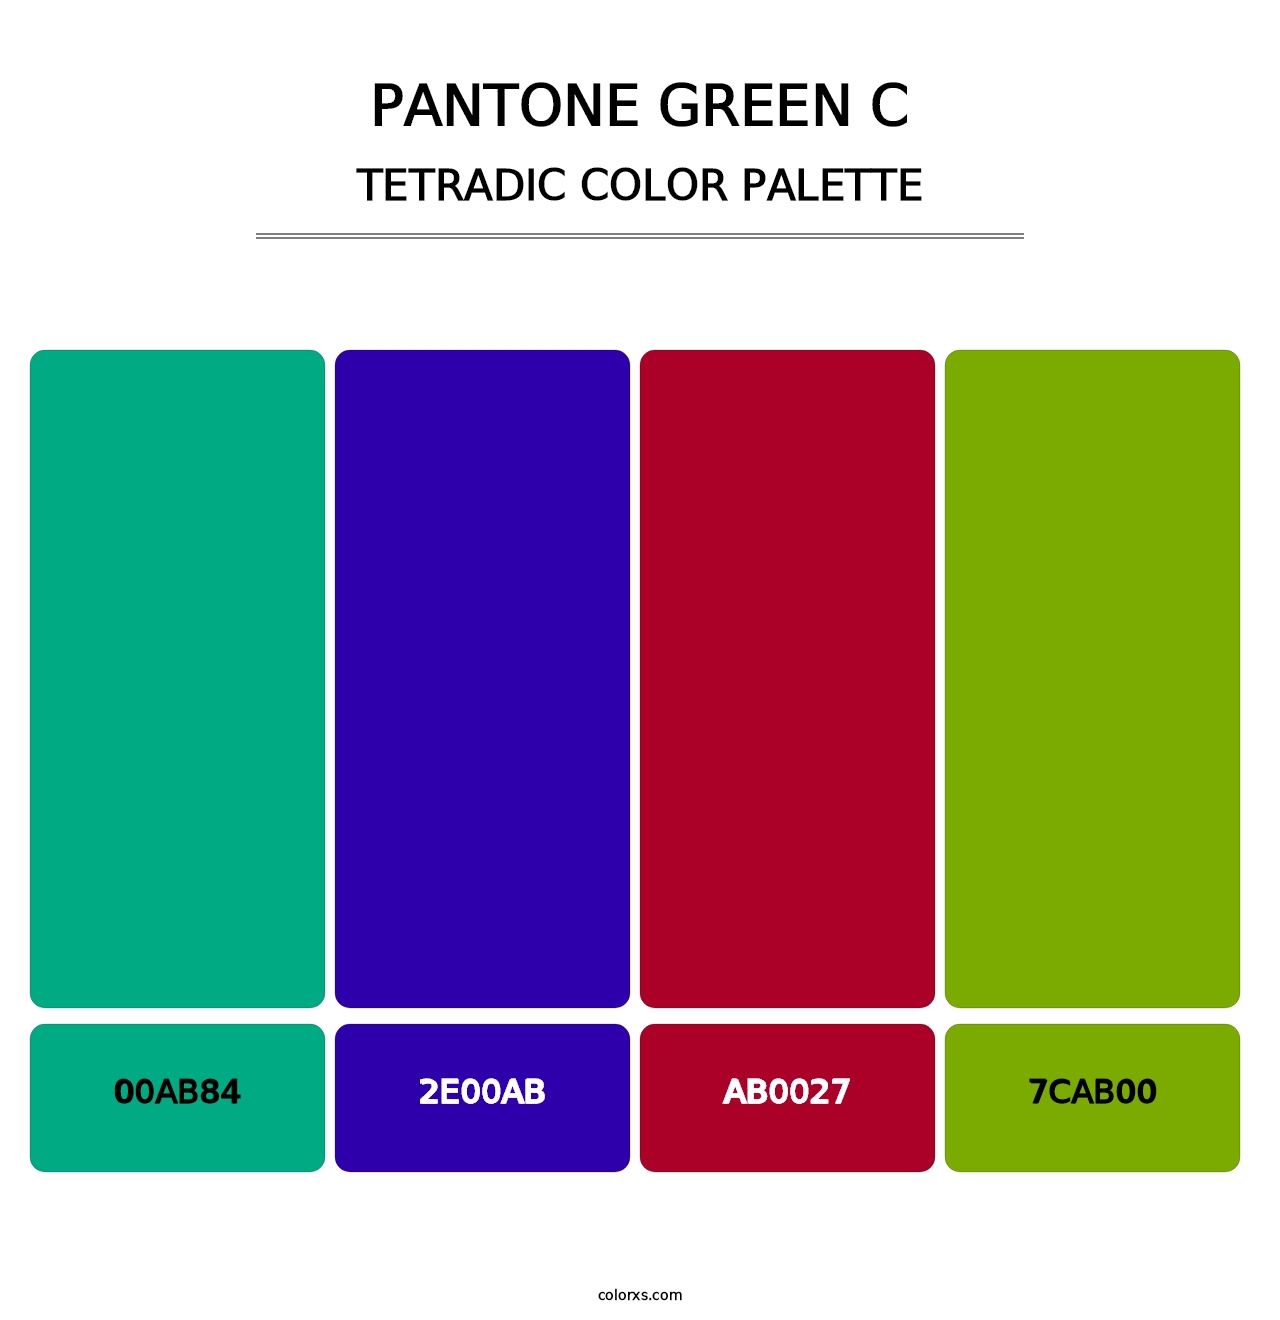 PANTONE Green C - Tetradic Color Palette